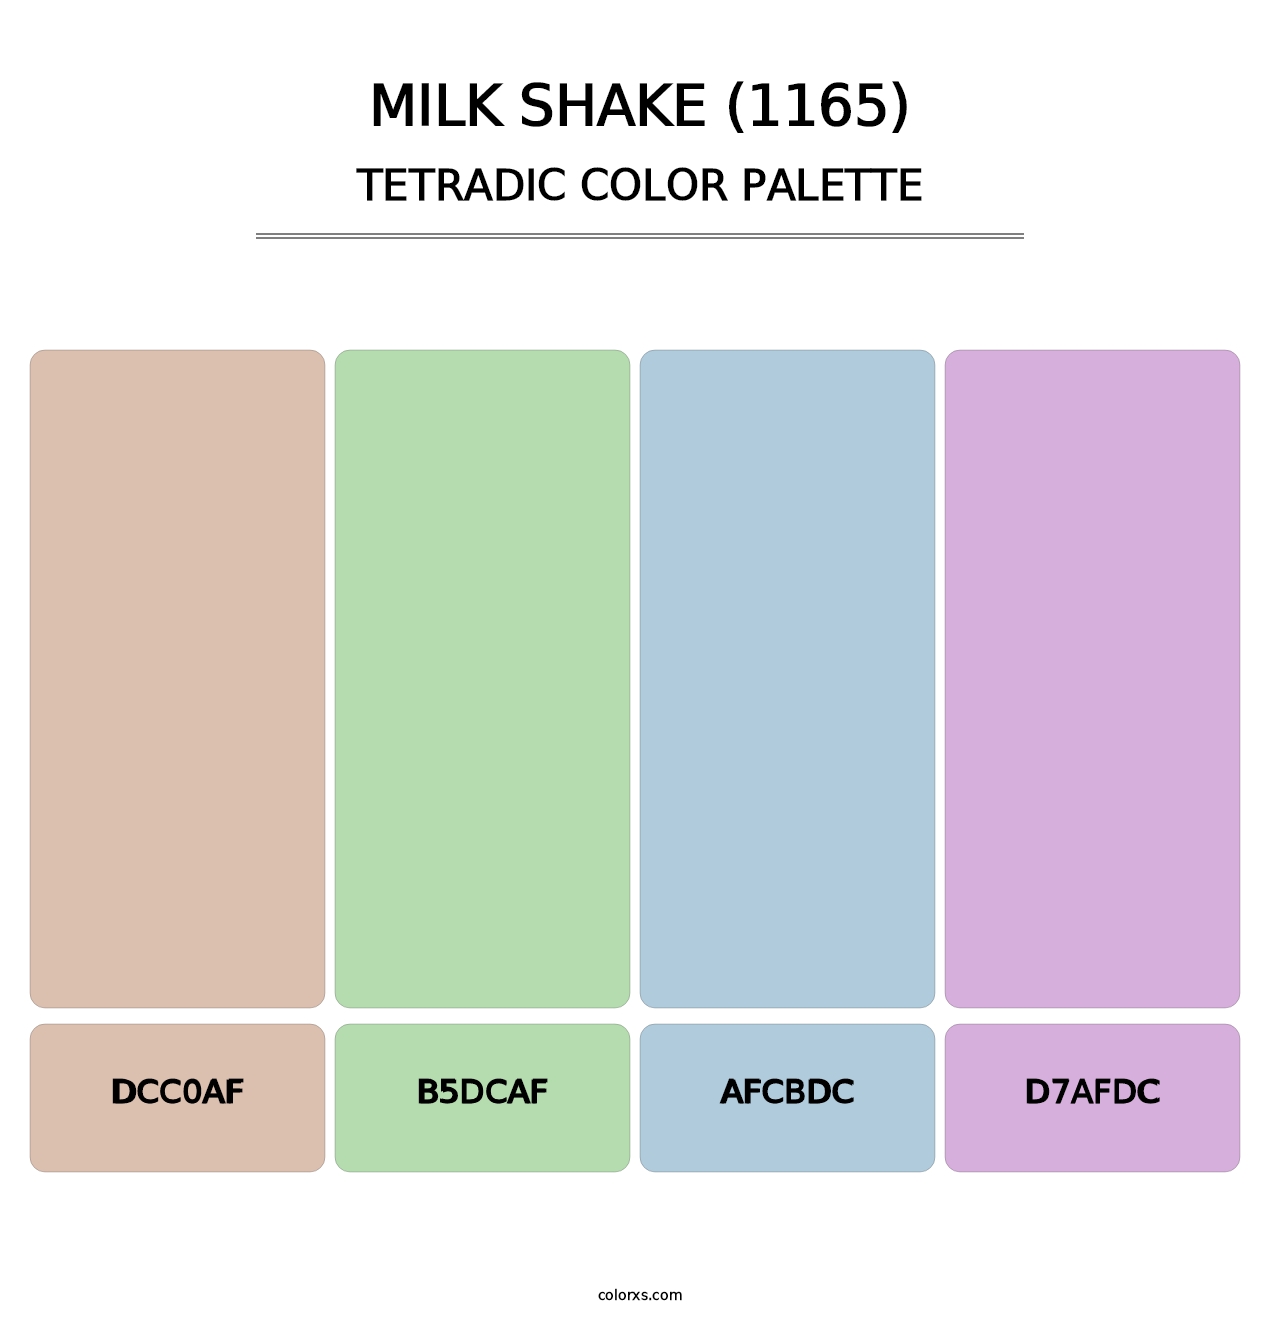 Milk Shake (1165) - Tetradic Color Palette